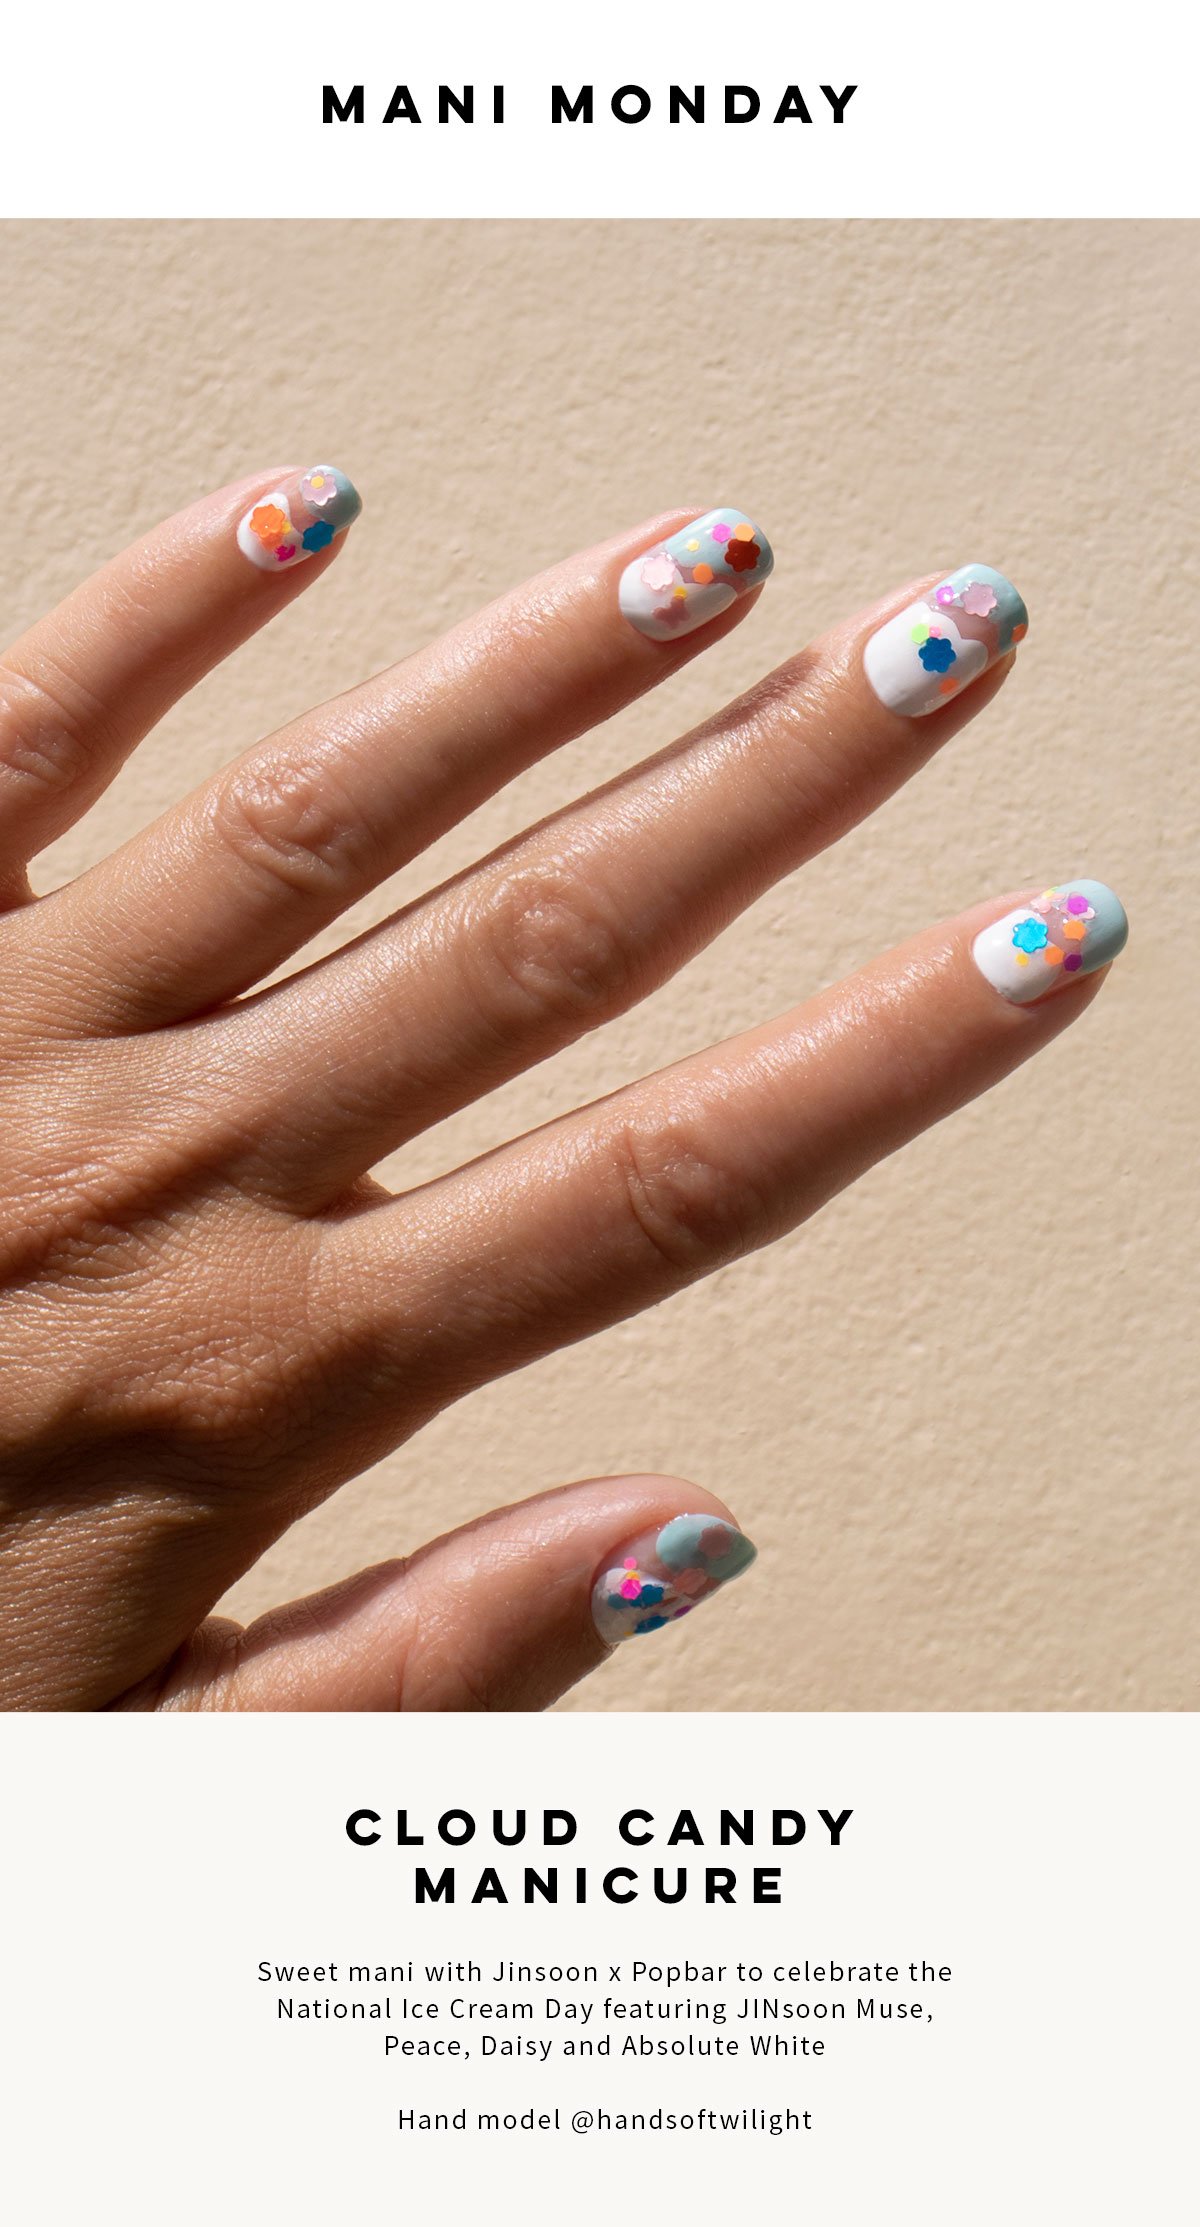 Louis Vuitton X Yayoi Kusama inspired nail art - Hey, Nice Nails!